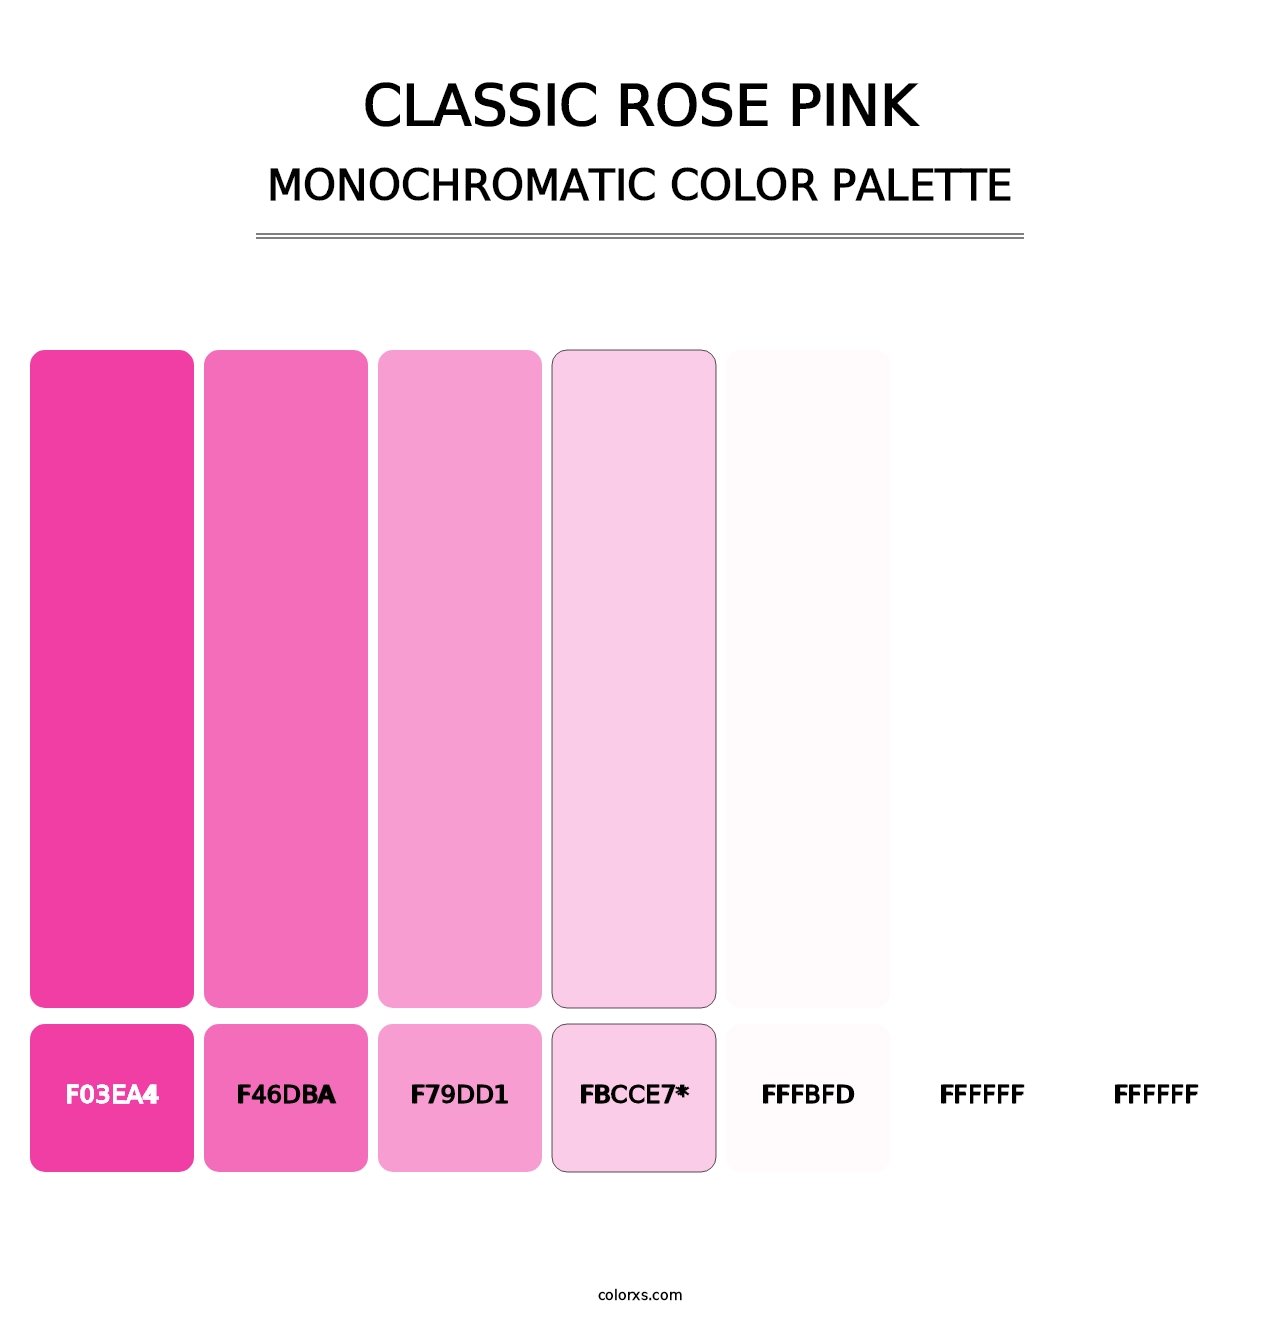 Classic Rose Pink - Monochromatic Color Palette